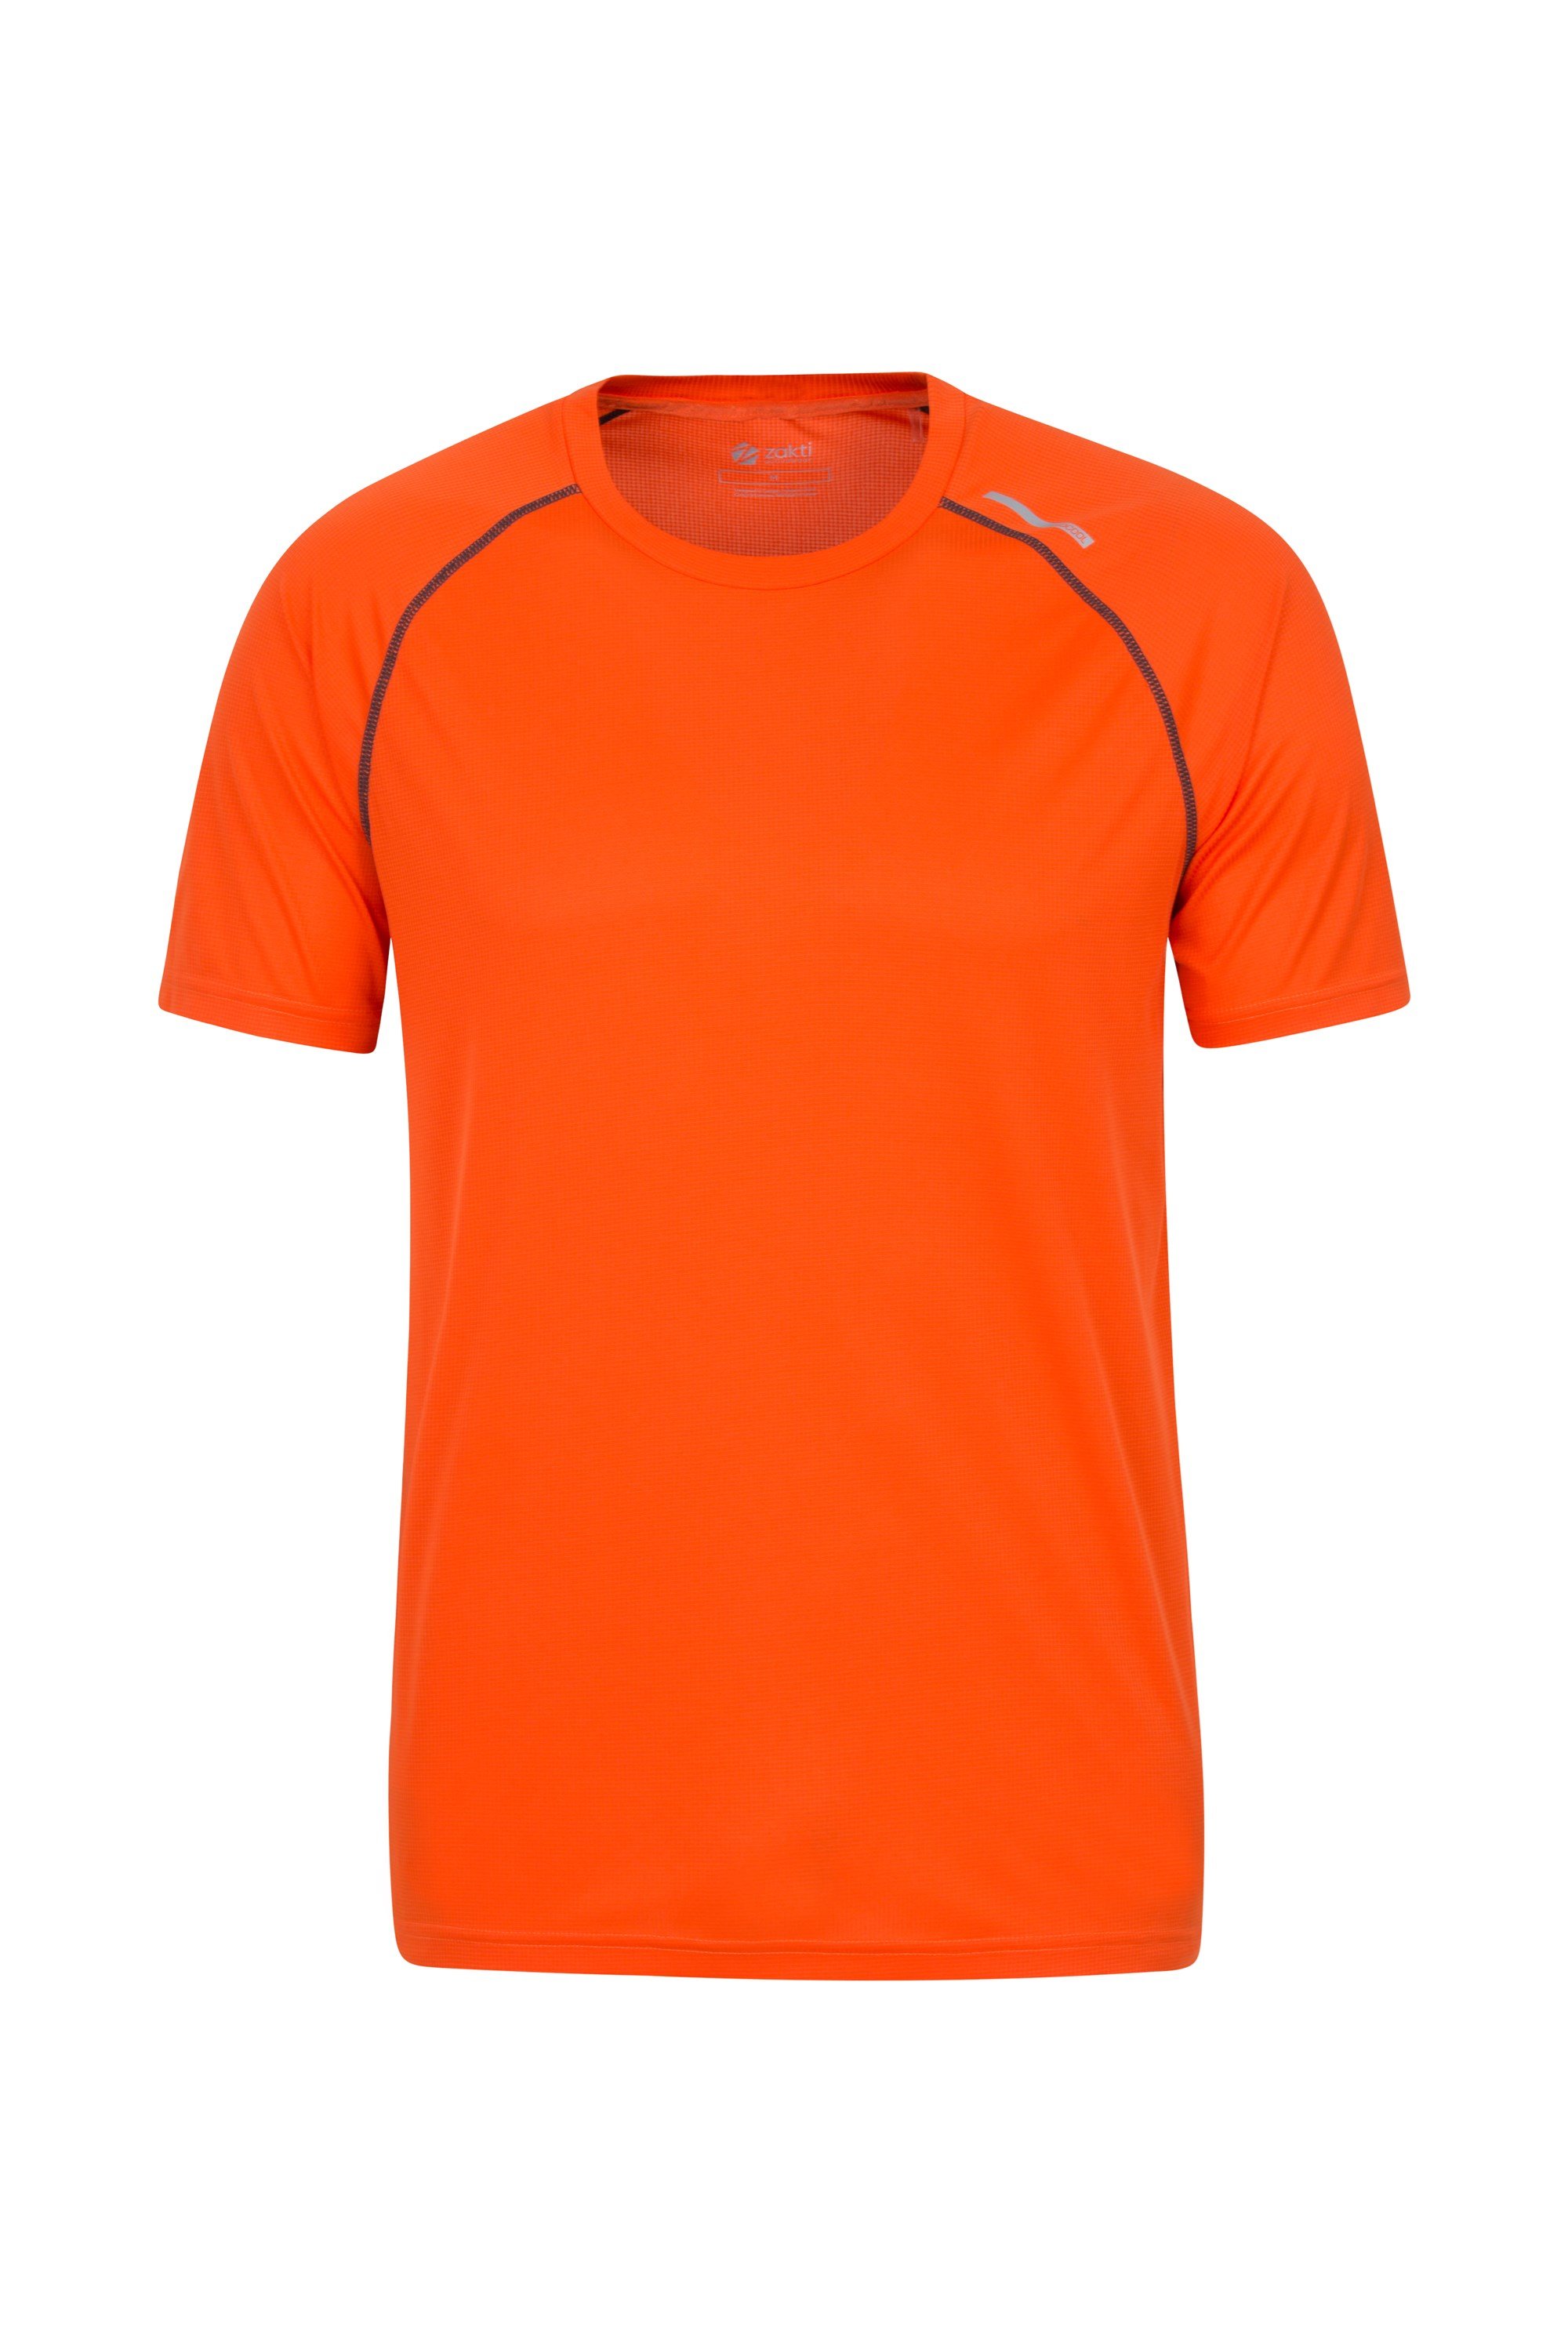 Mountain Warehouse Aero Mens Short Sleeve Top Orange